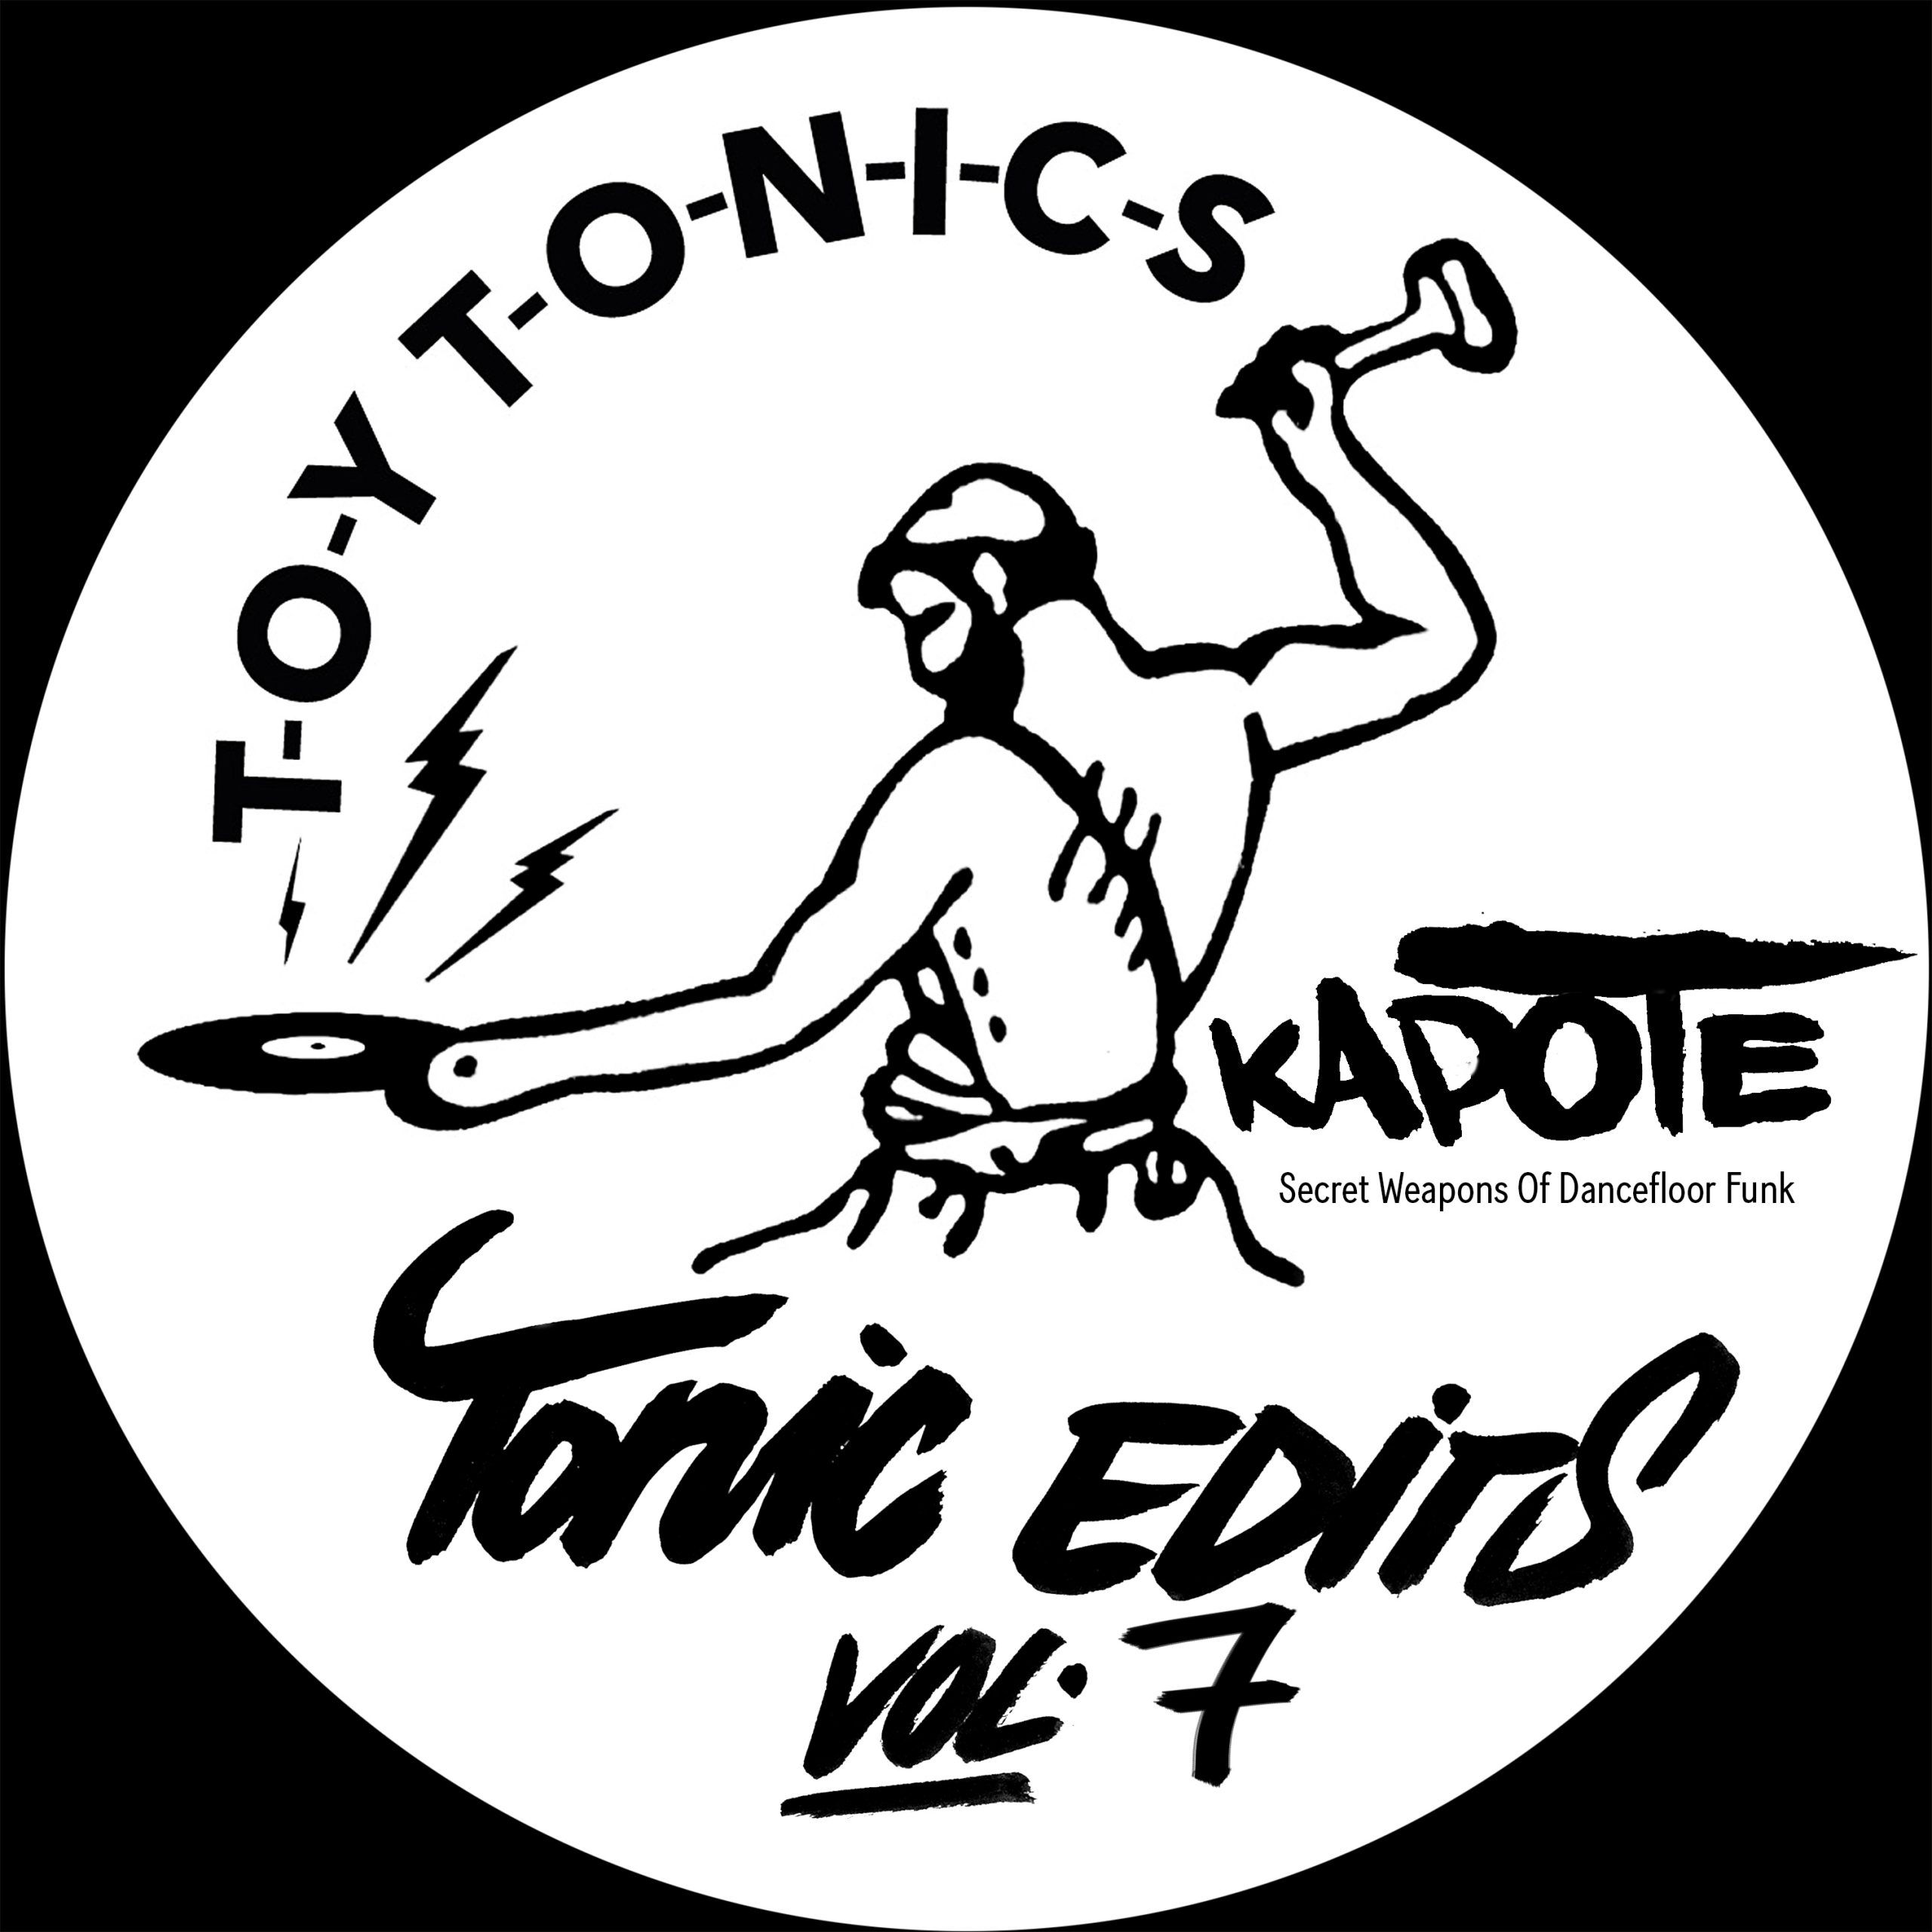 Kapote - Tonic Edits Vol. 7 [TOYT104]